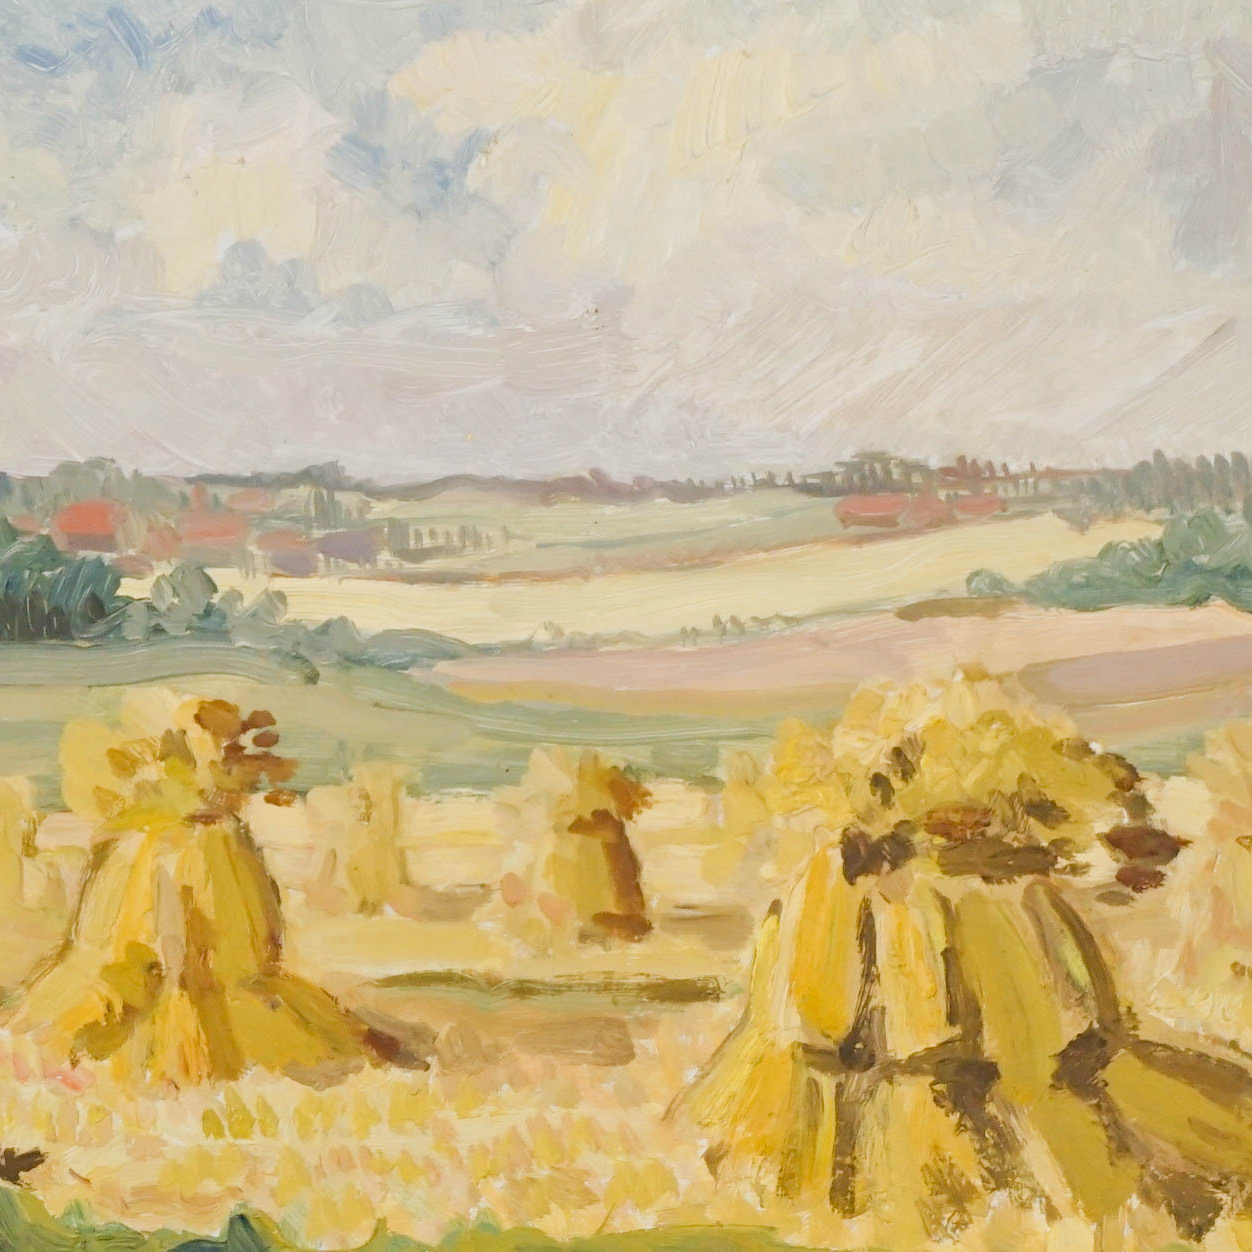 Haystacks in Field